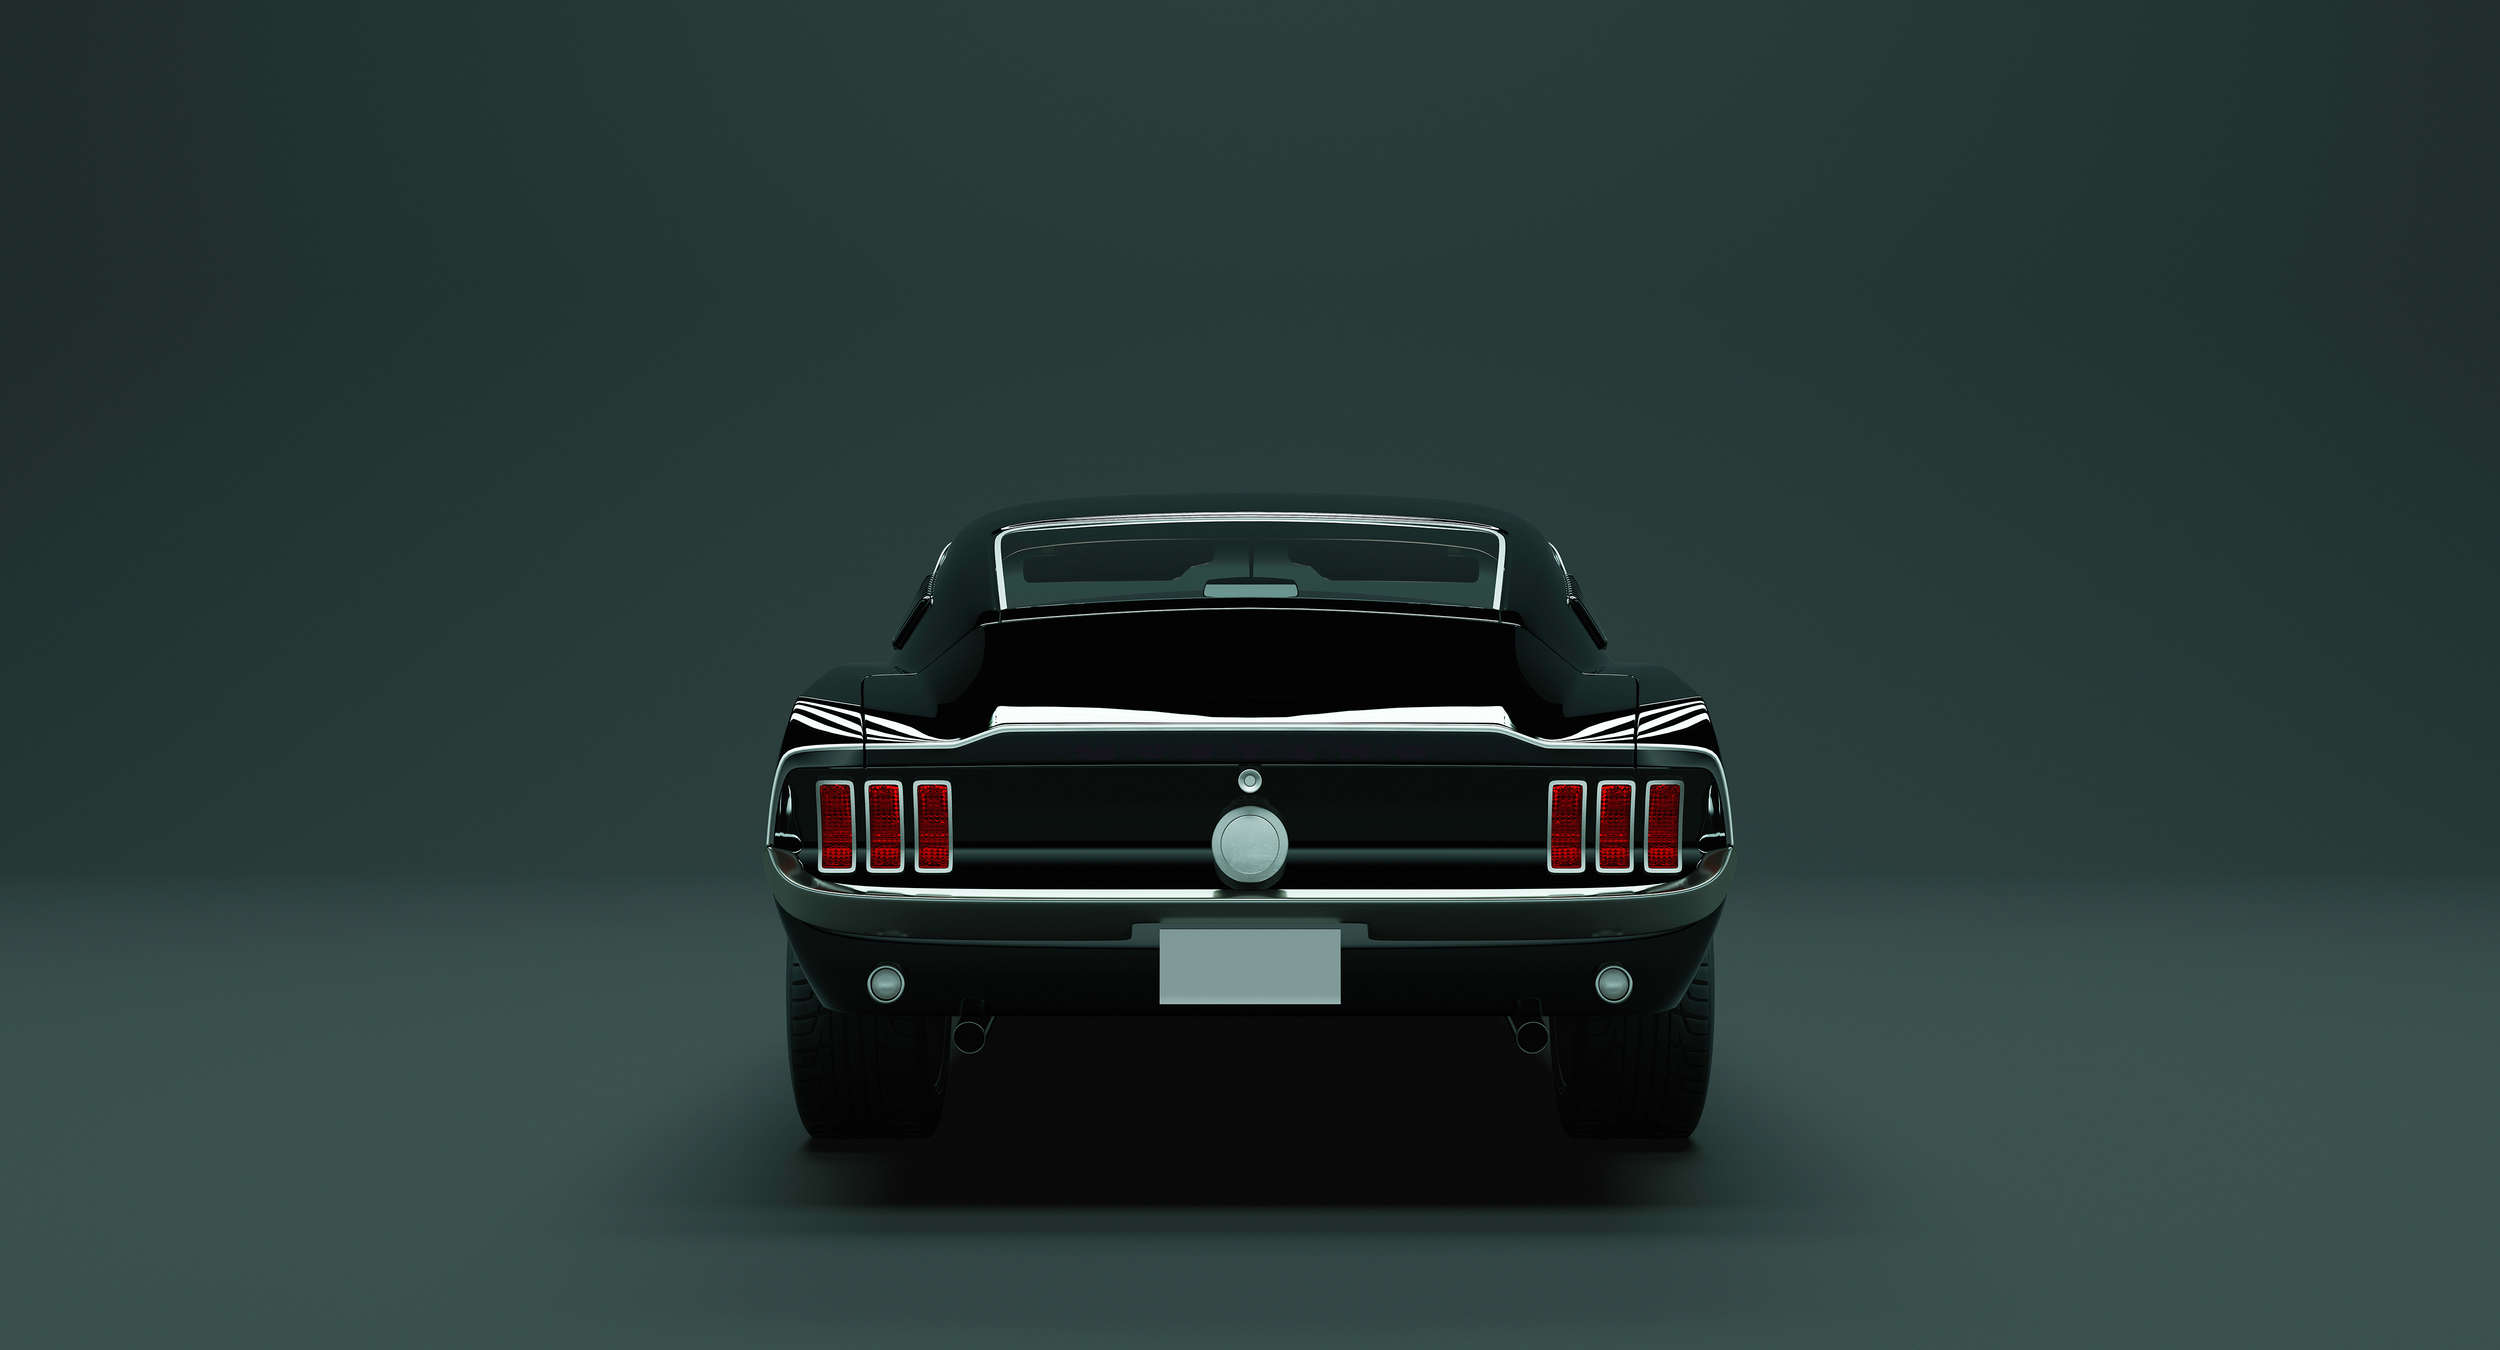             Mustang 3 - American Muscle Car Fototapete – Blau, Schwarz | Perlmutt Glattvlies
        